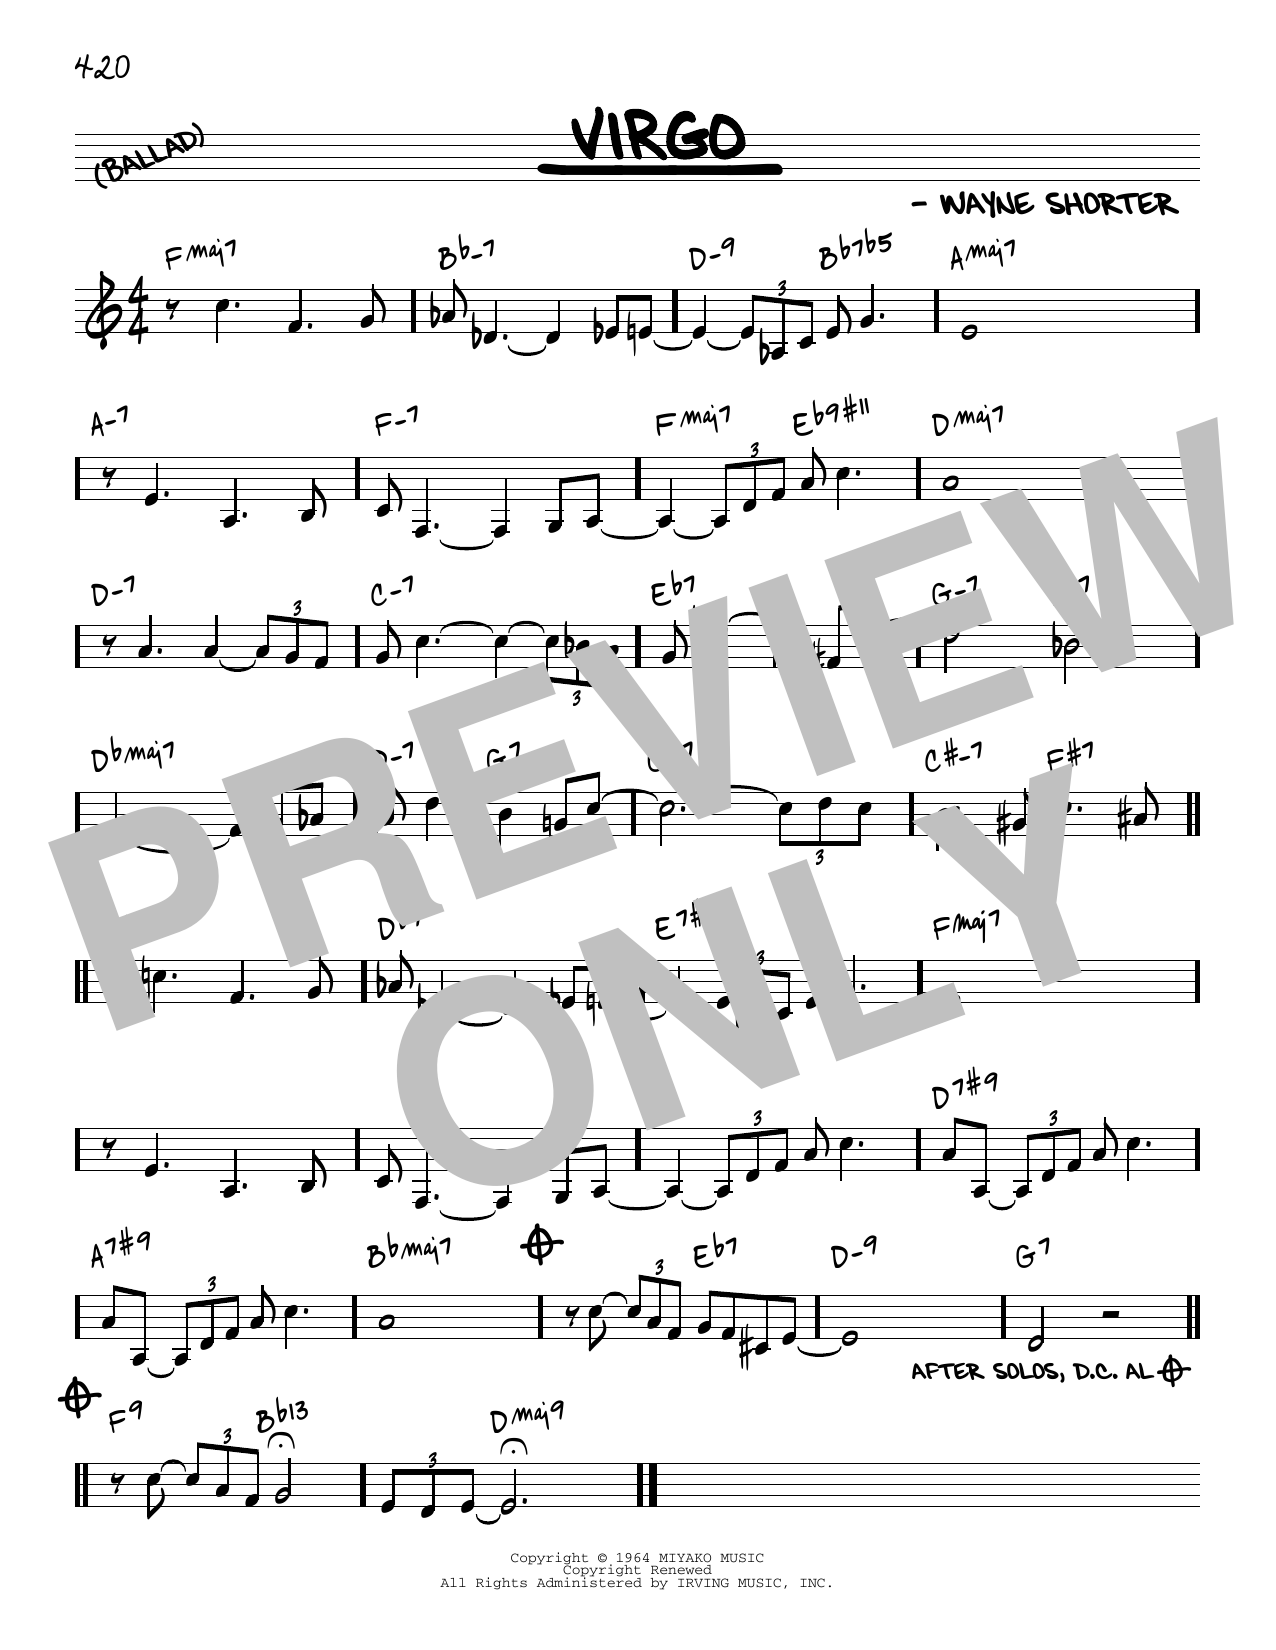 Download Wayne Shorter Virgo [Reharmonized version] (arr. Jack Sheet Music